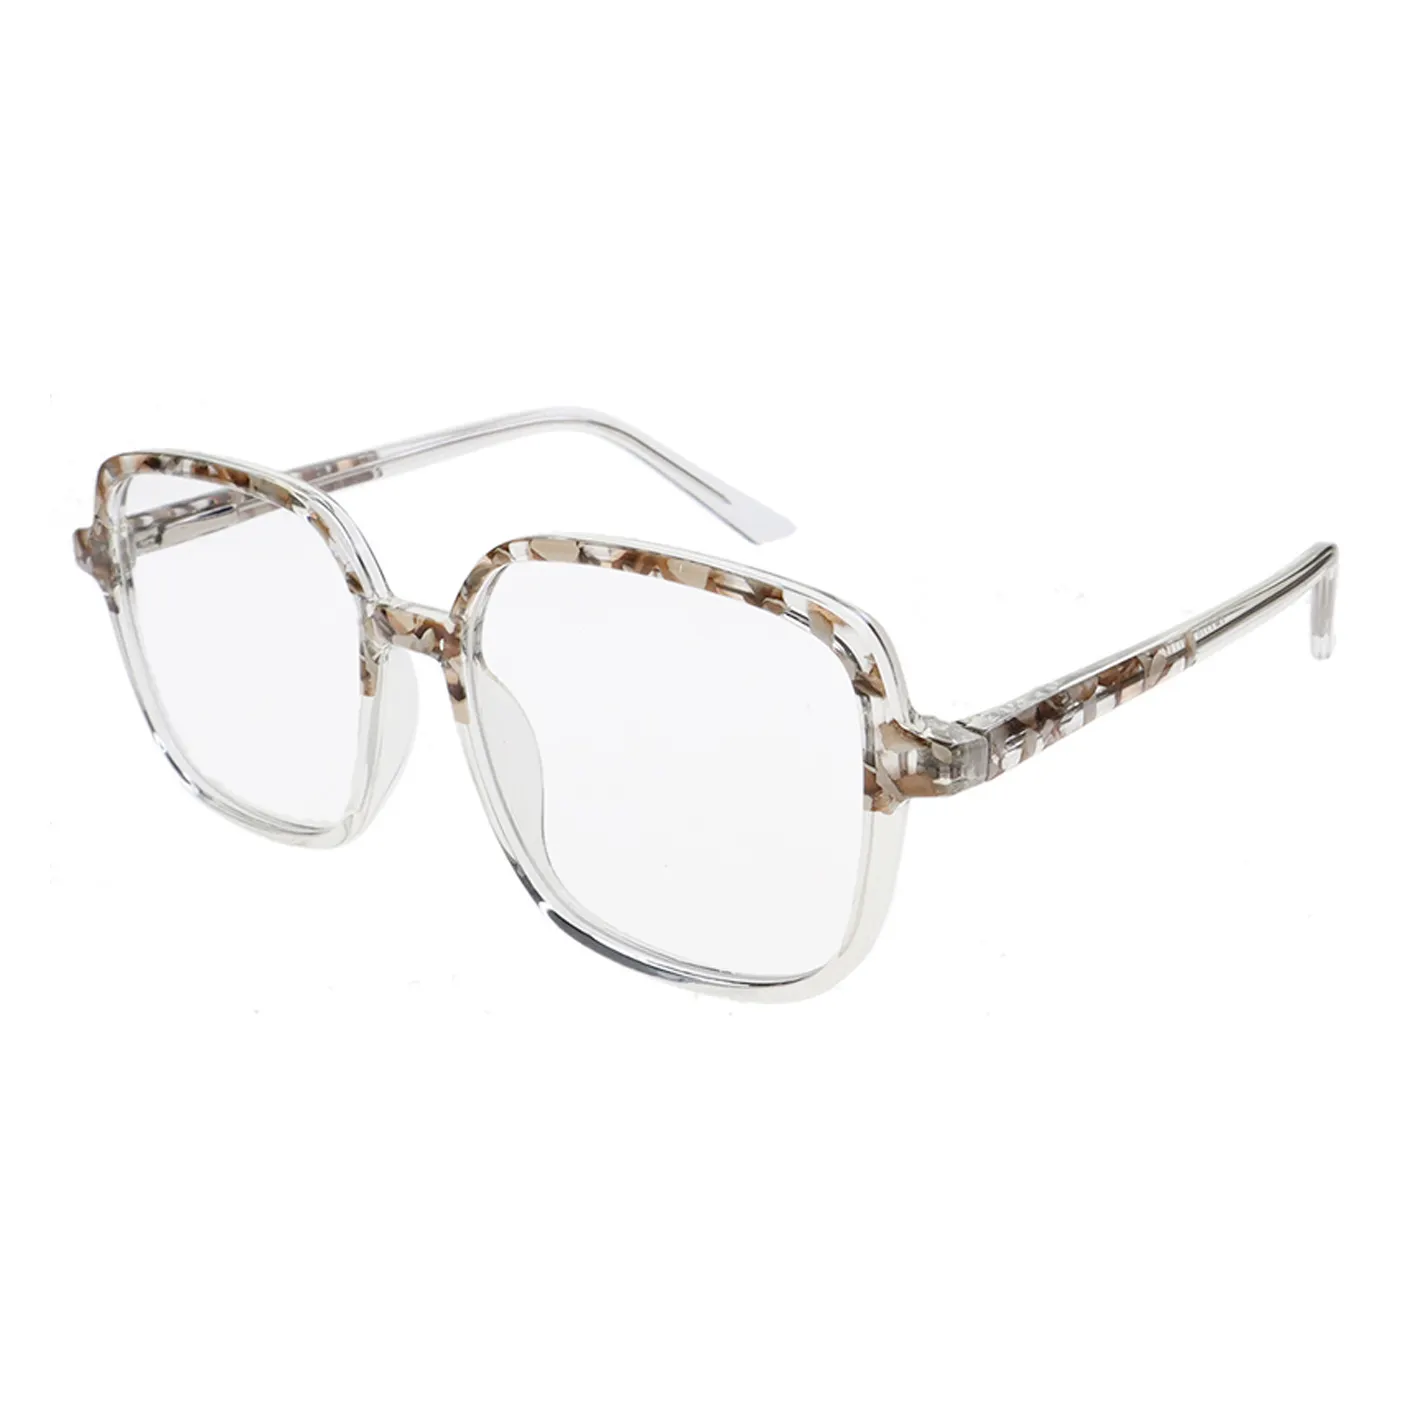 Plastic Optical Eyeglasses Women Men Lightweight Spectacle Frame for Myopic Support Prescription LensPC Eyewear